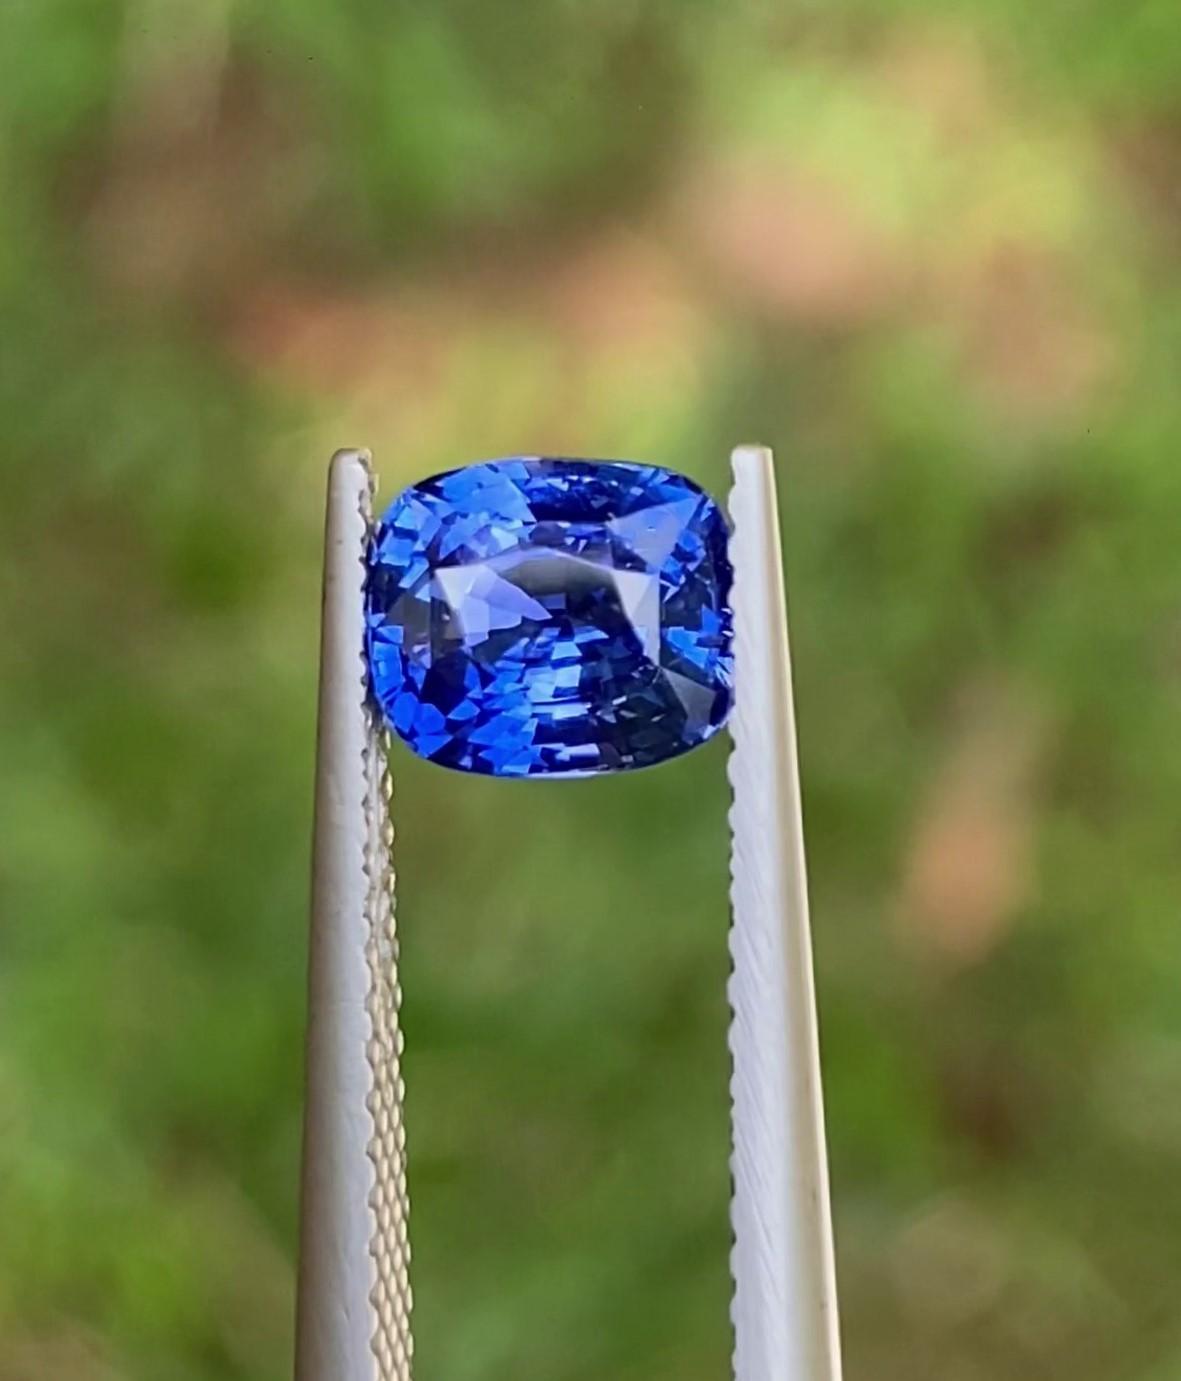 Cushion Cut Natural Blue Sapphire Ceylon Origin Ring Gemstone 1.53 Carats GIC certified  For Sale